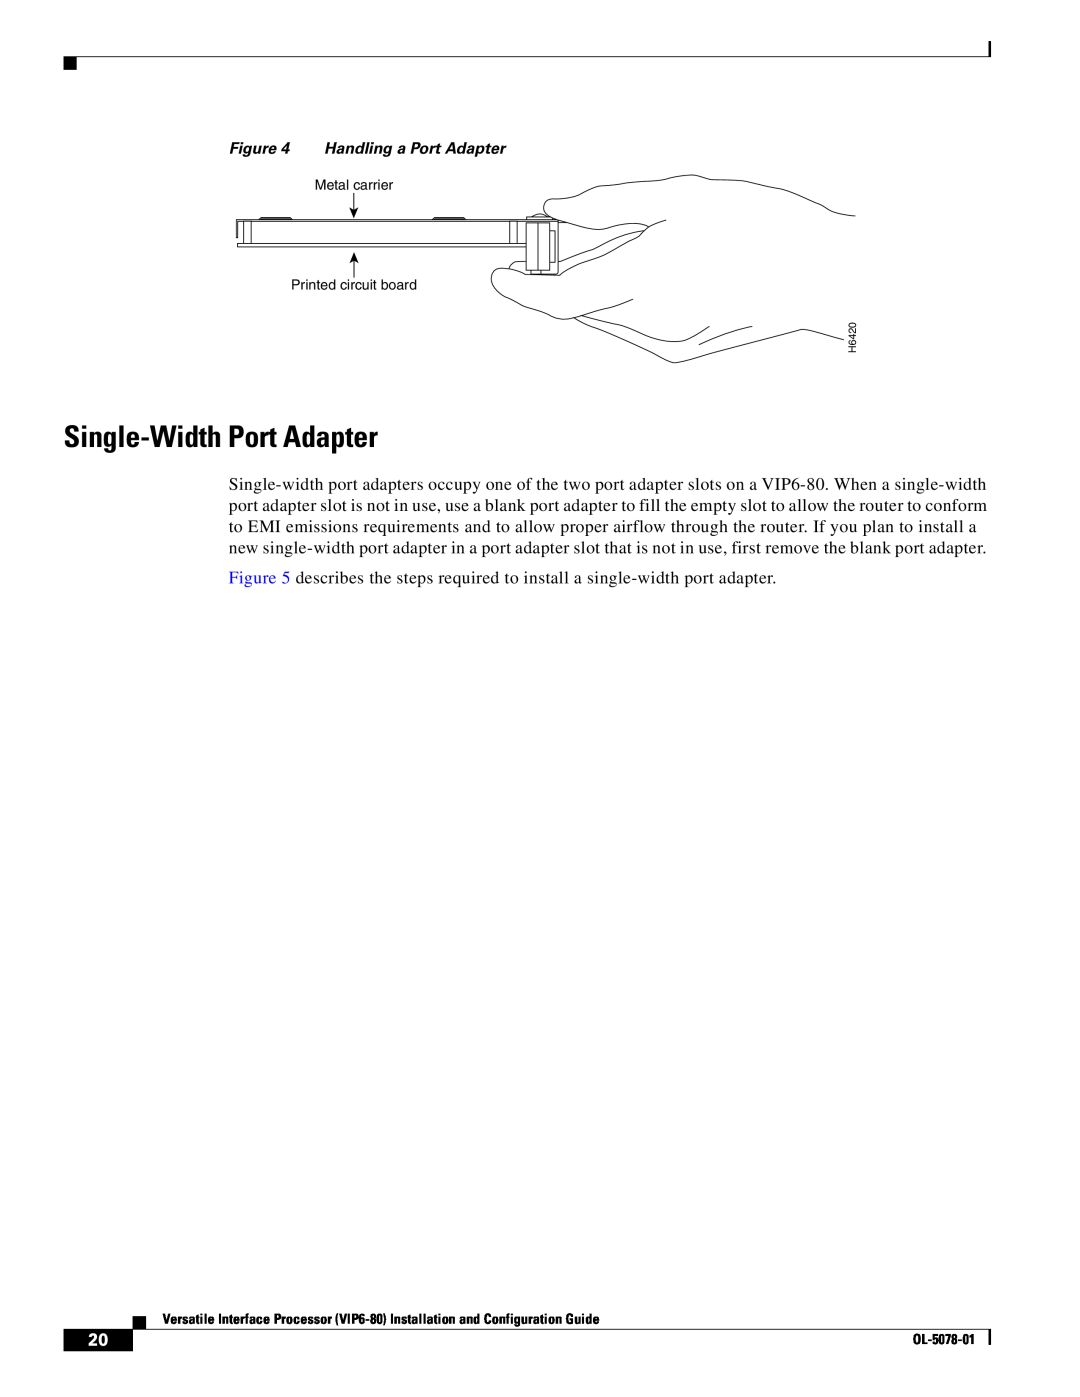 Cisco Systems (VIP6-80) manual Single-Width Port Adapter, Handling a Port Adapter 